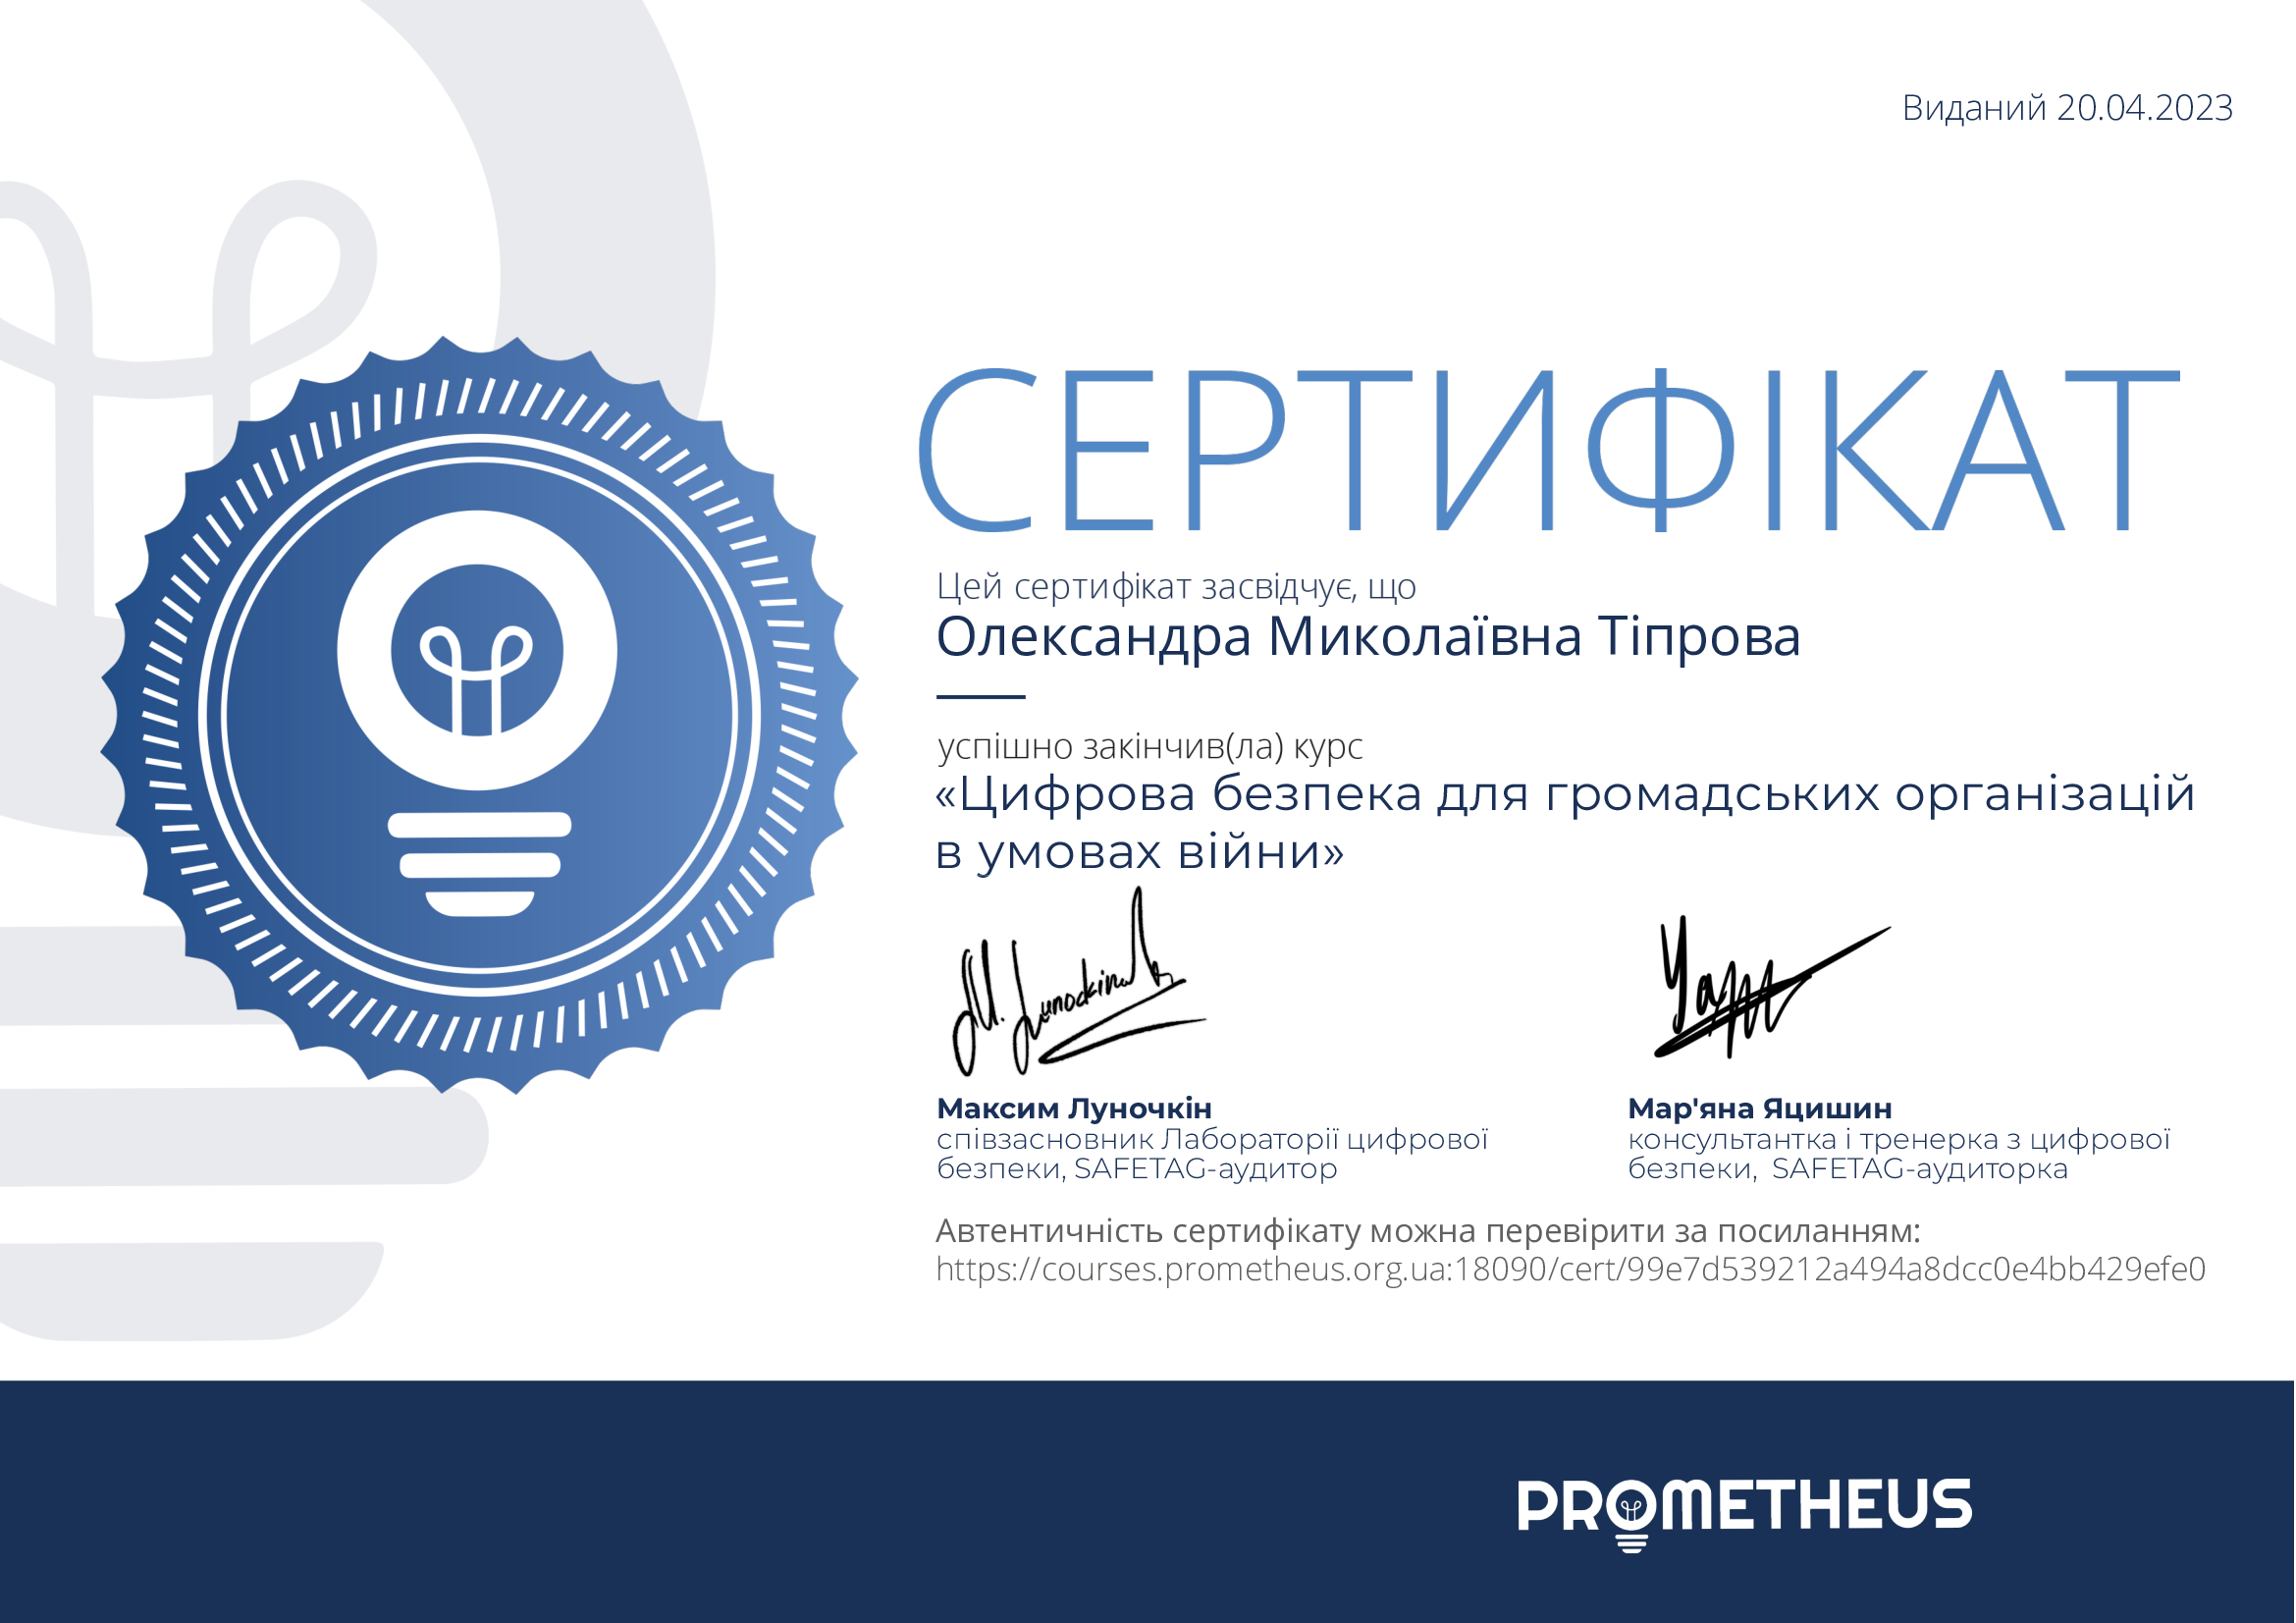 Certificate-цифрова-безпека